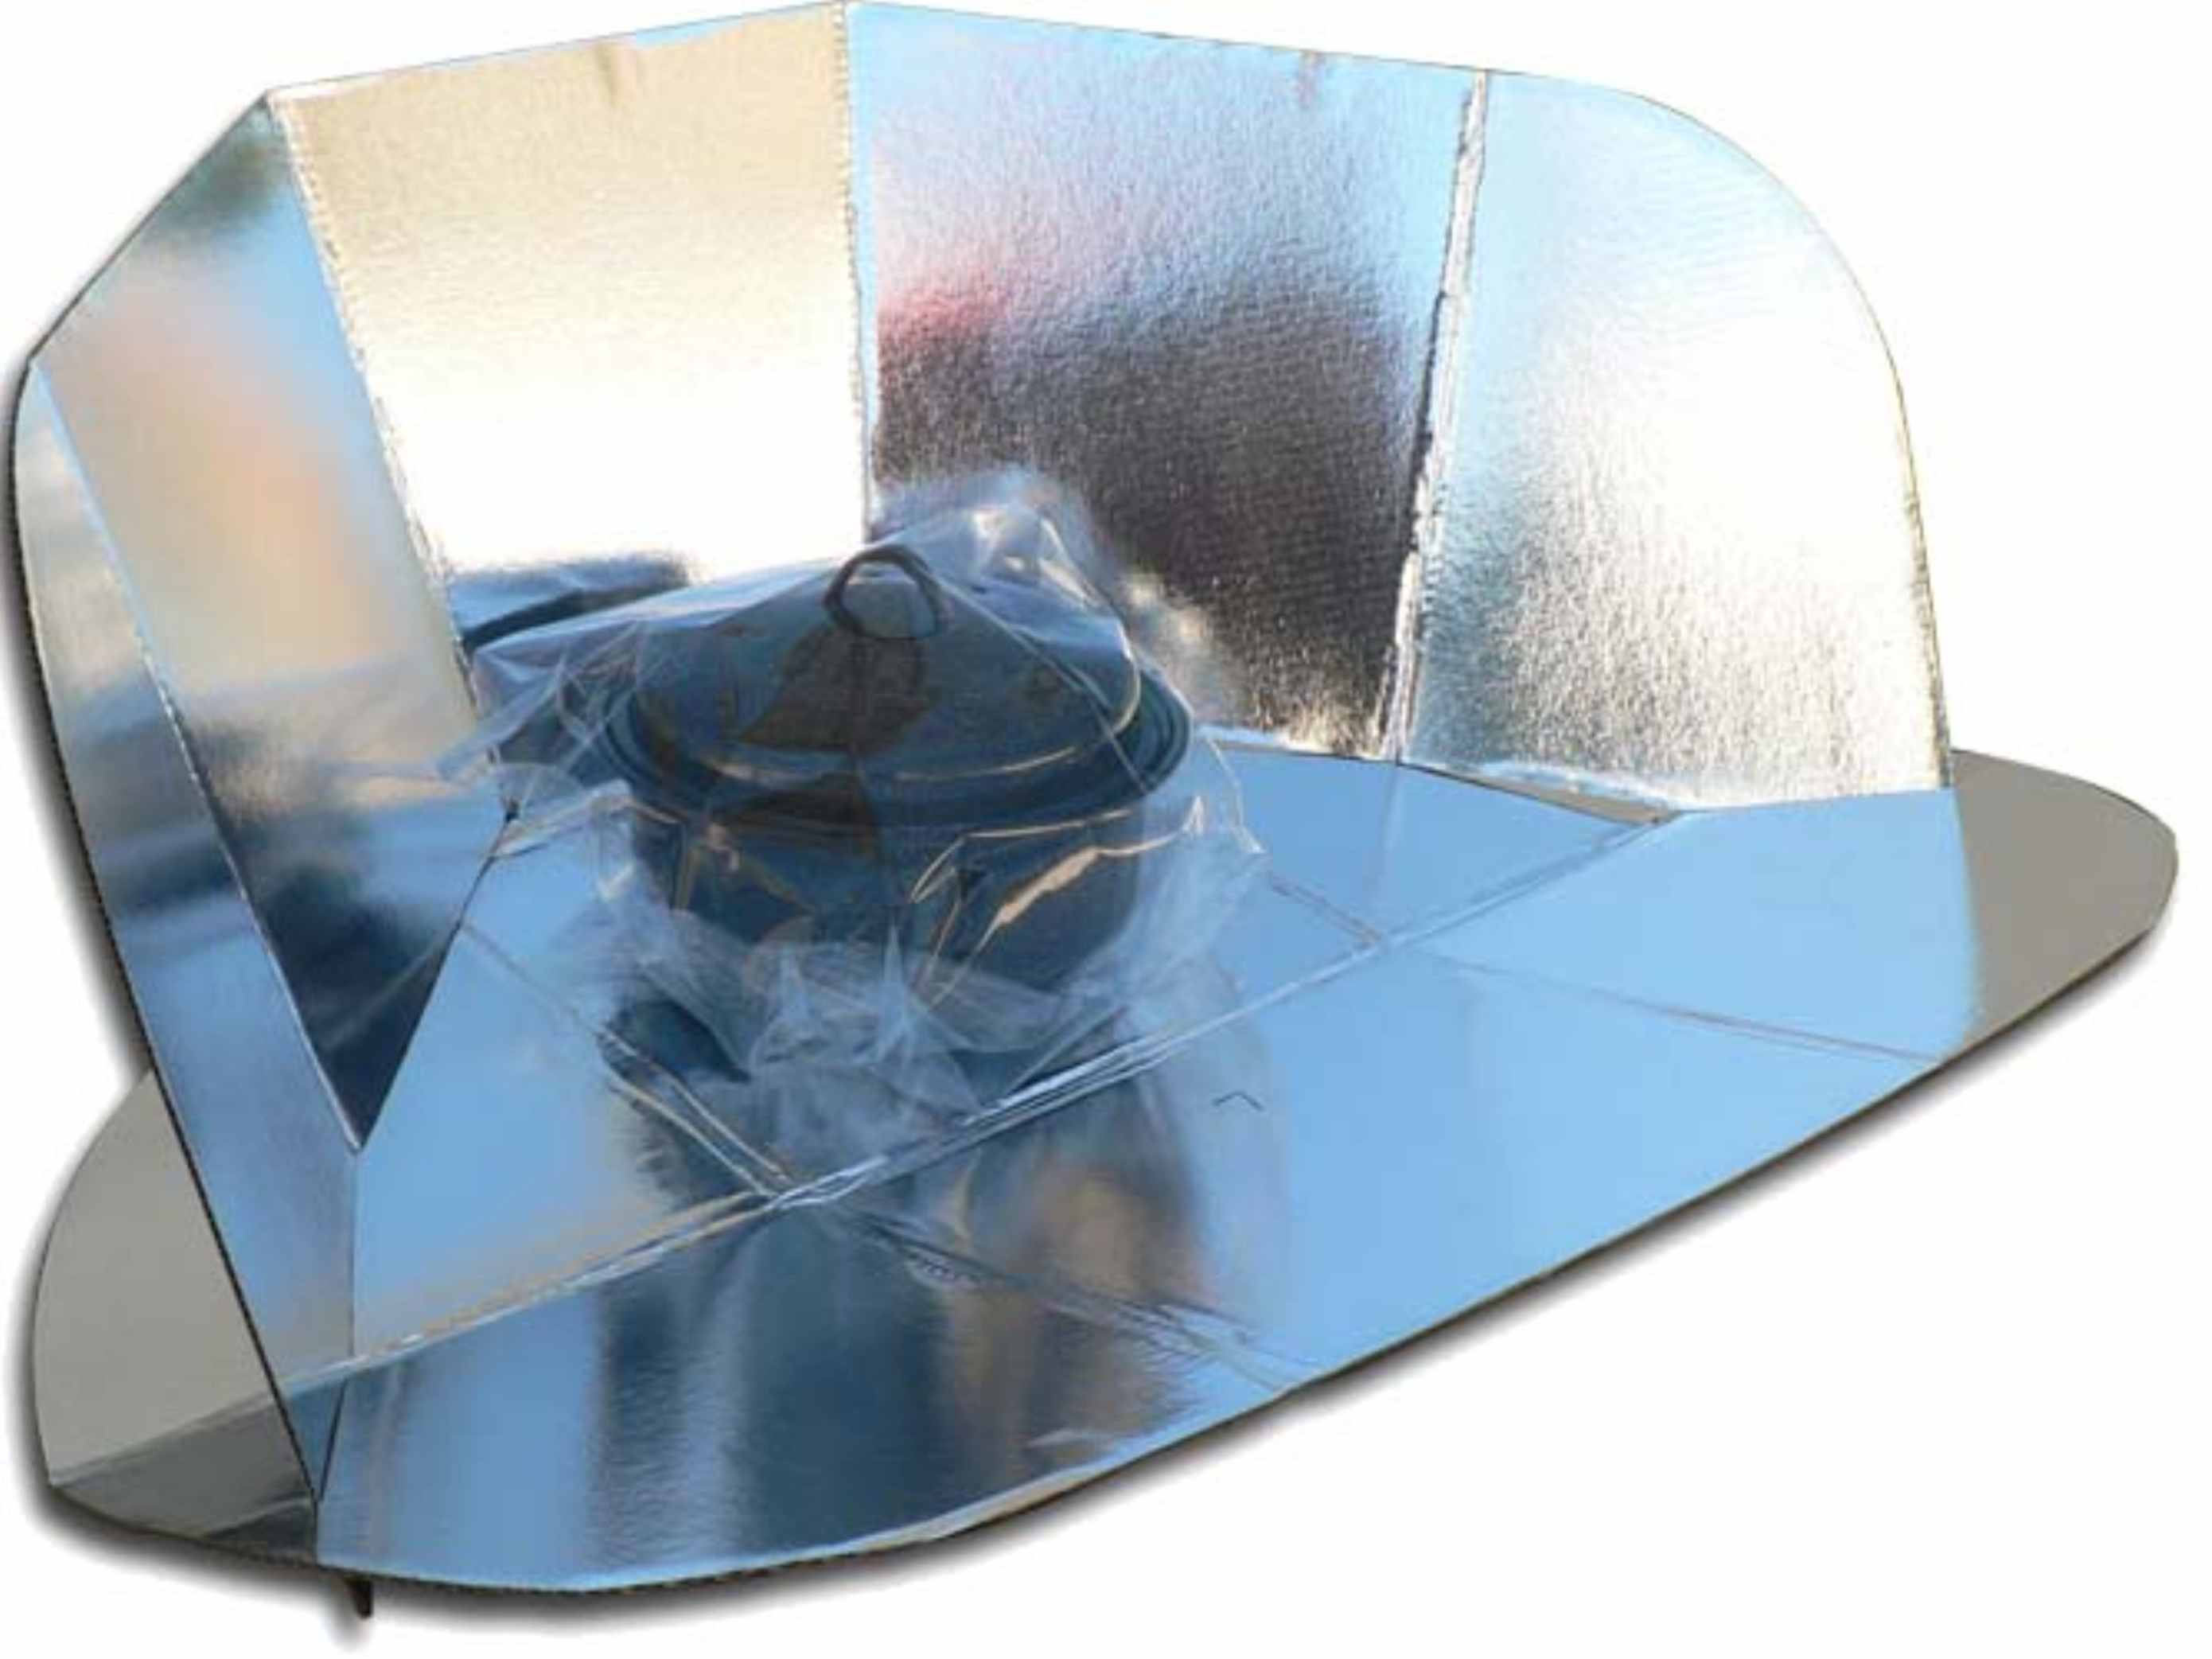 Solar panel cooker designs